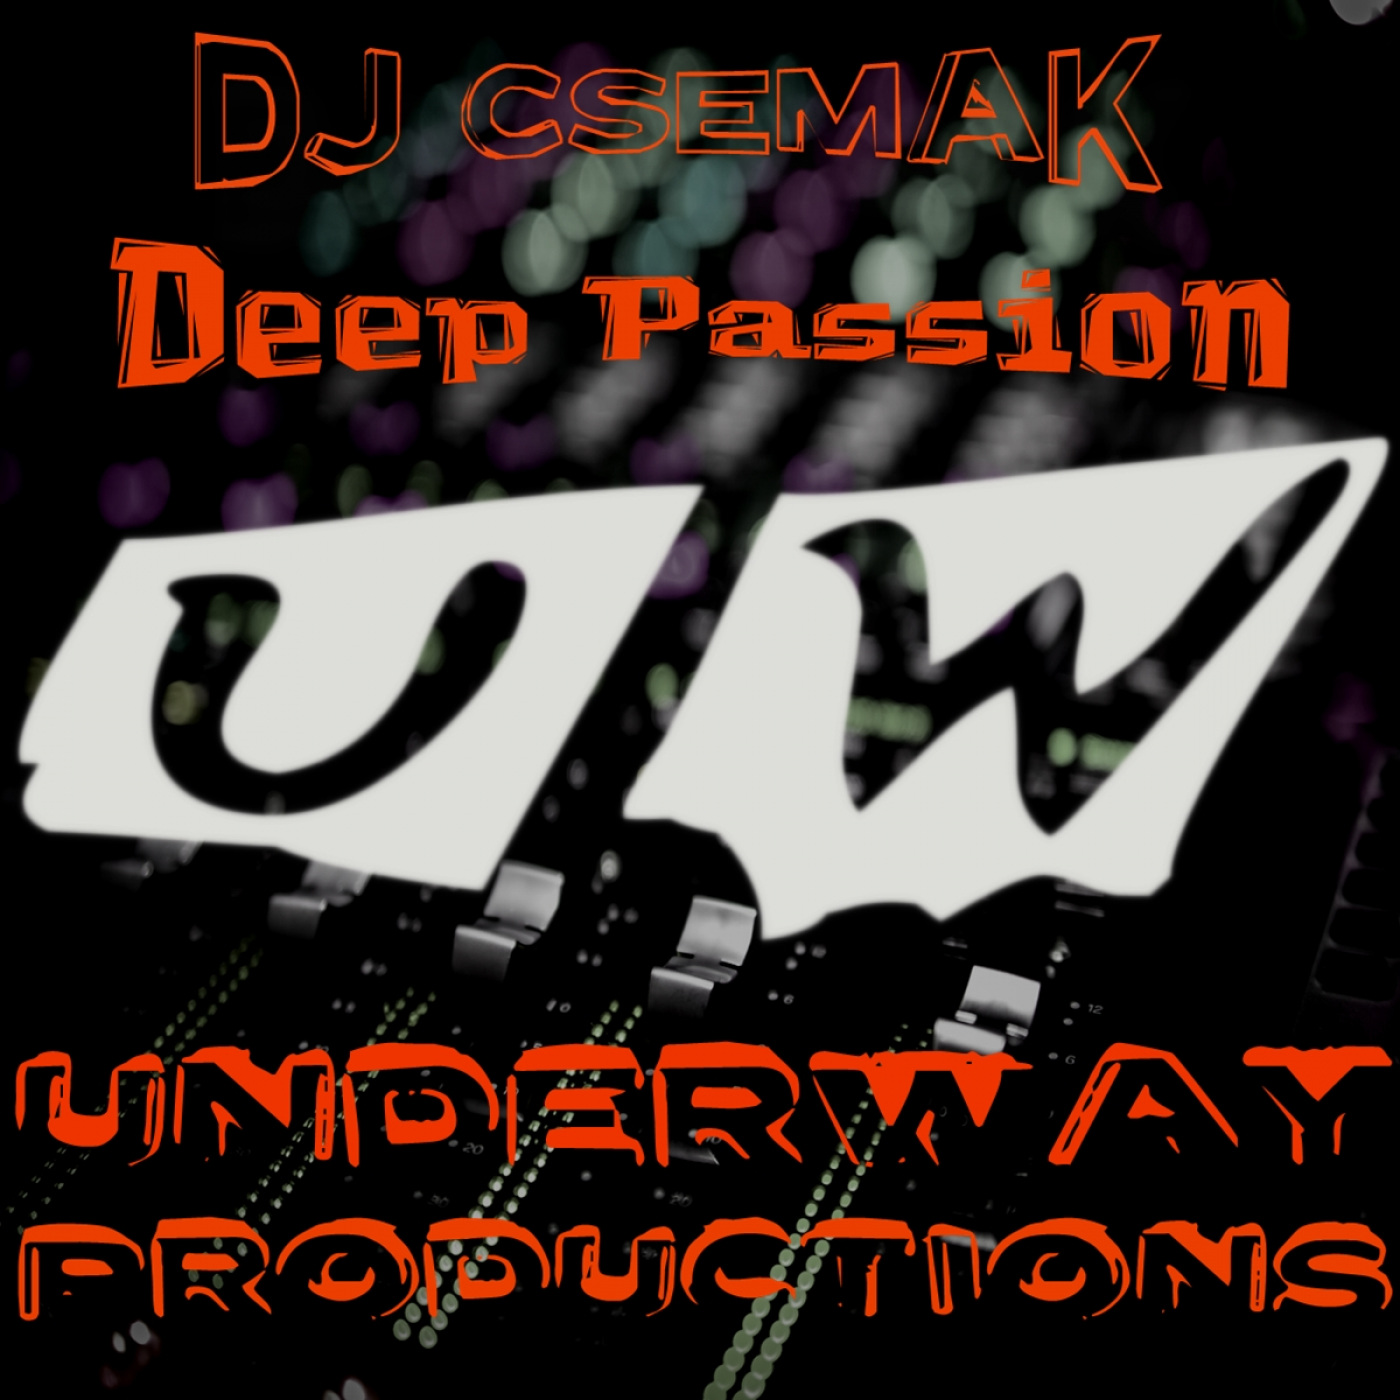 Dj Csemak - Deep Passion / Underway Productions